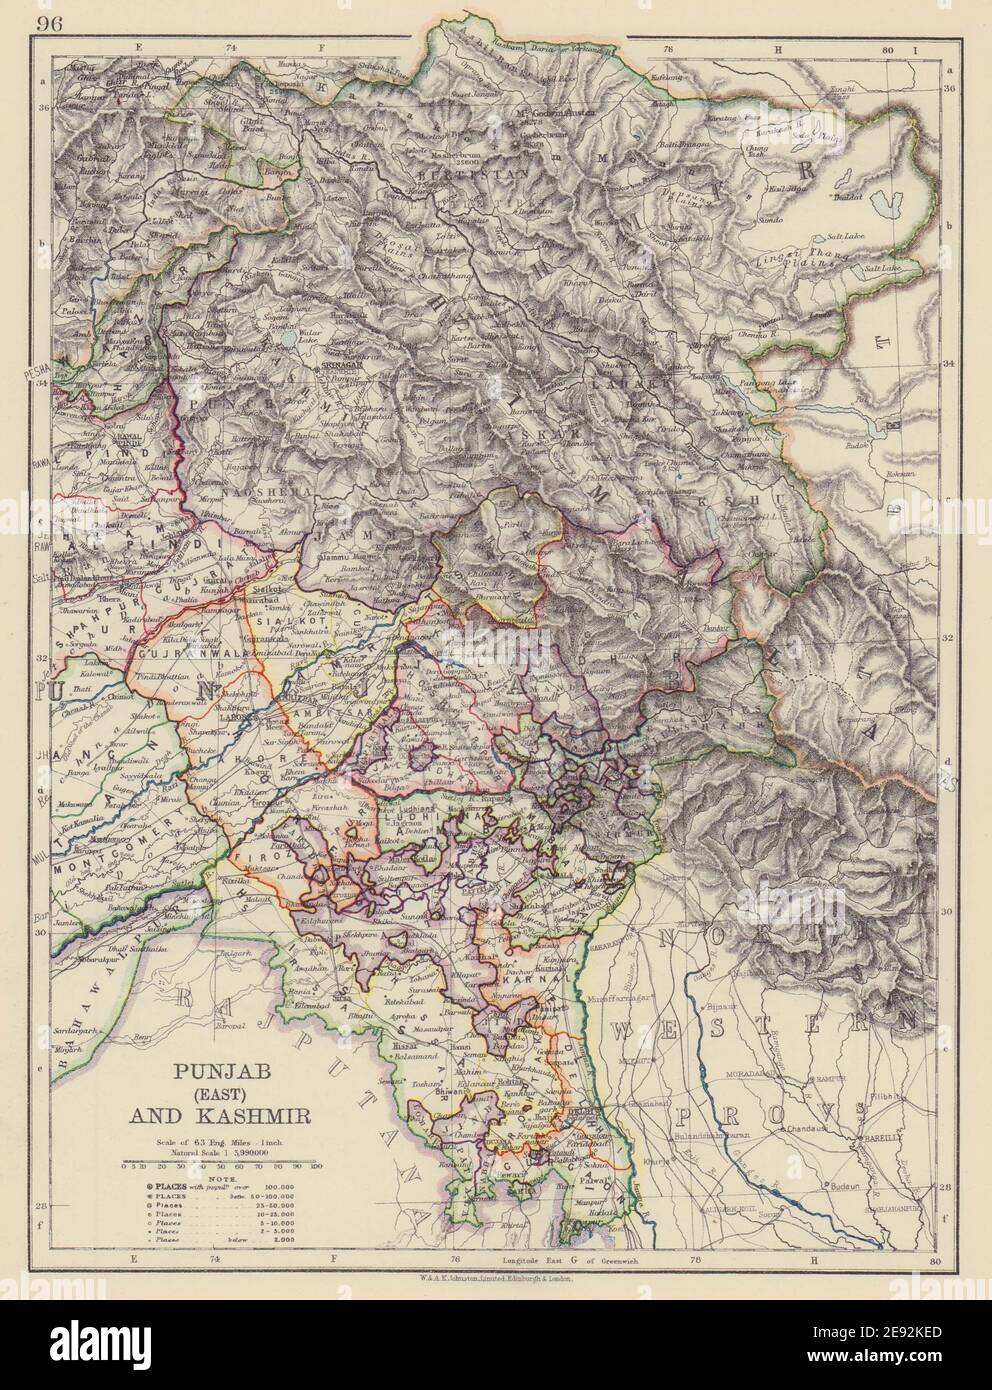 BRITISH INDIA NW. East Punjab Jammu & Kashmir. Delhi. Railways 1901 old map Stock Photo